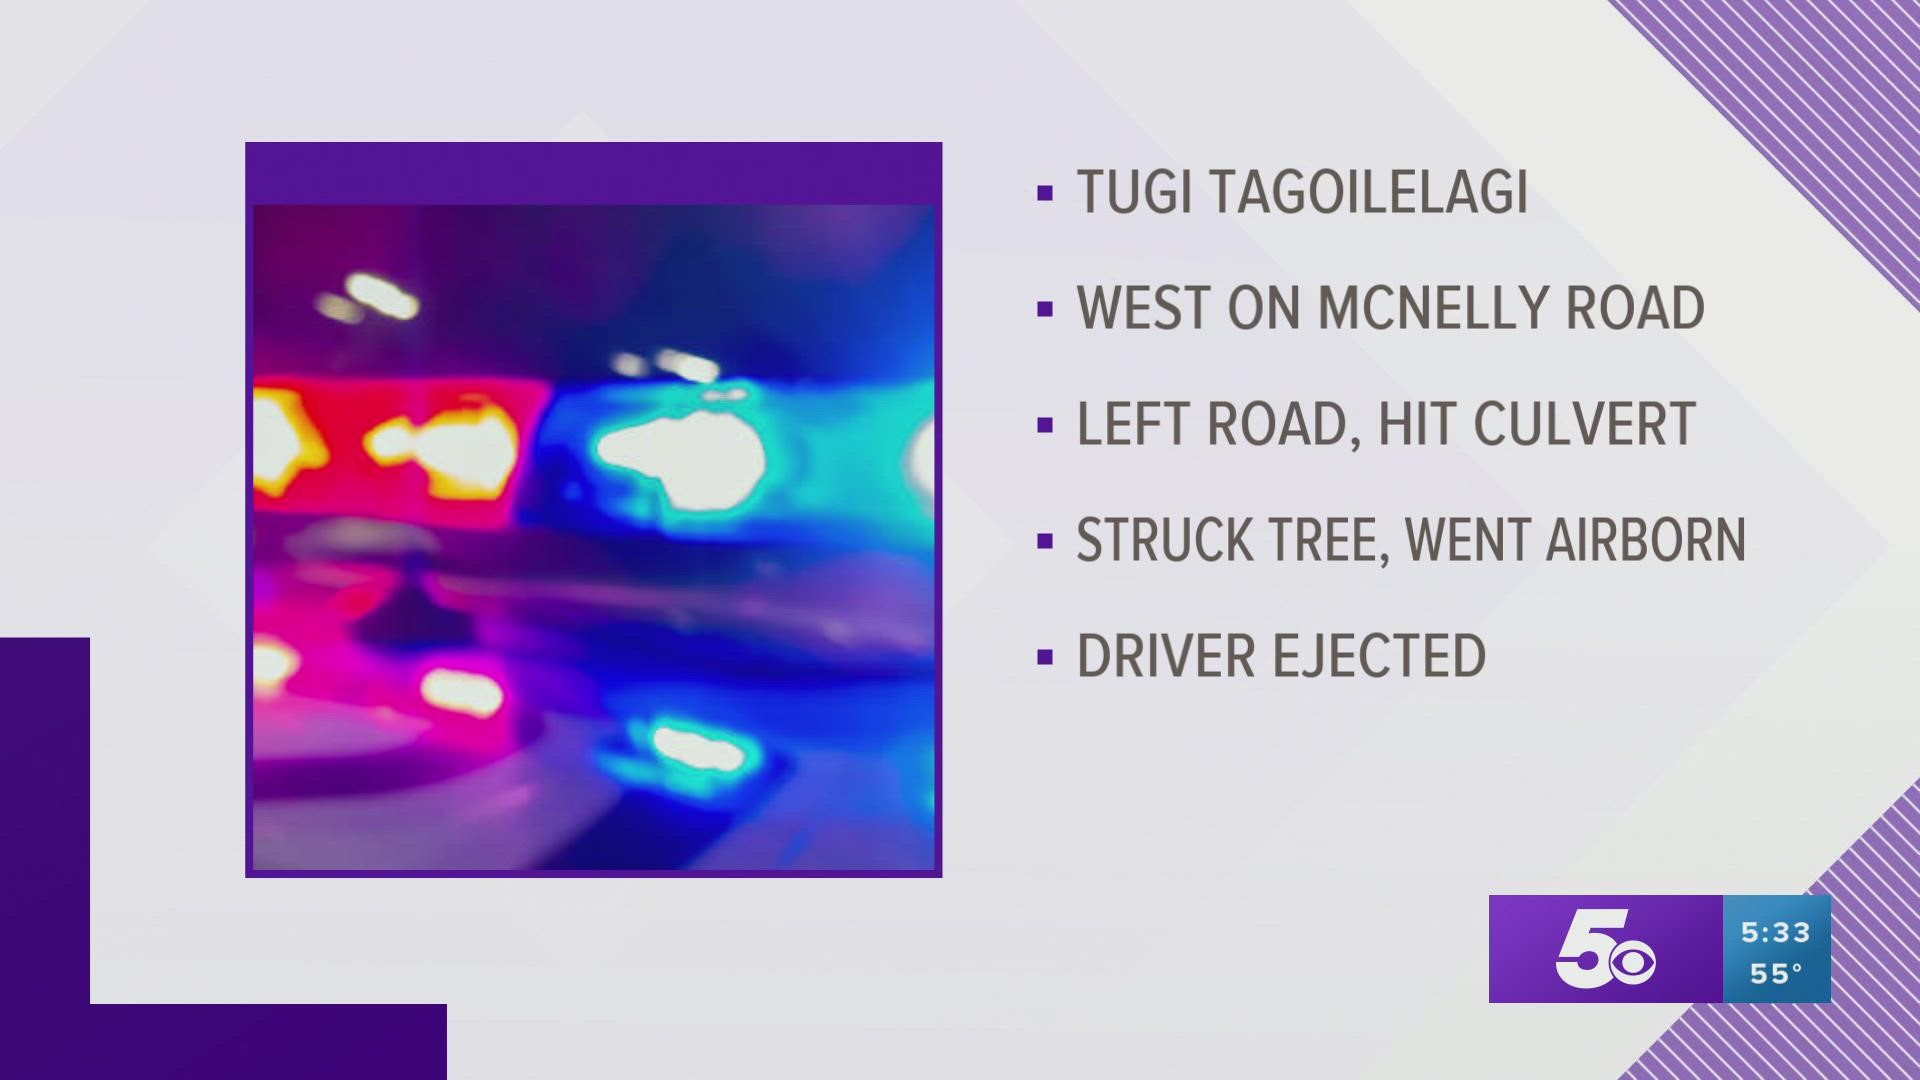 The victim was identified as 44-year-old Tugi Tagoilelagi.